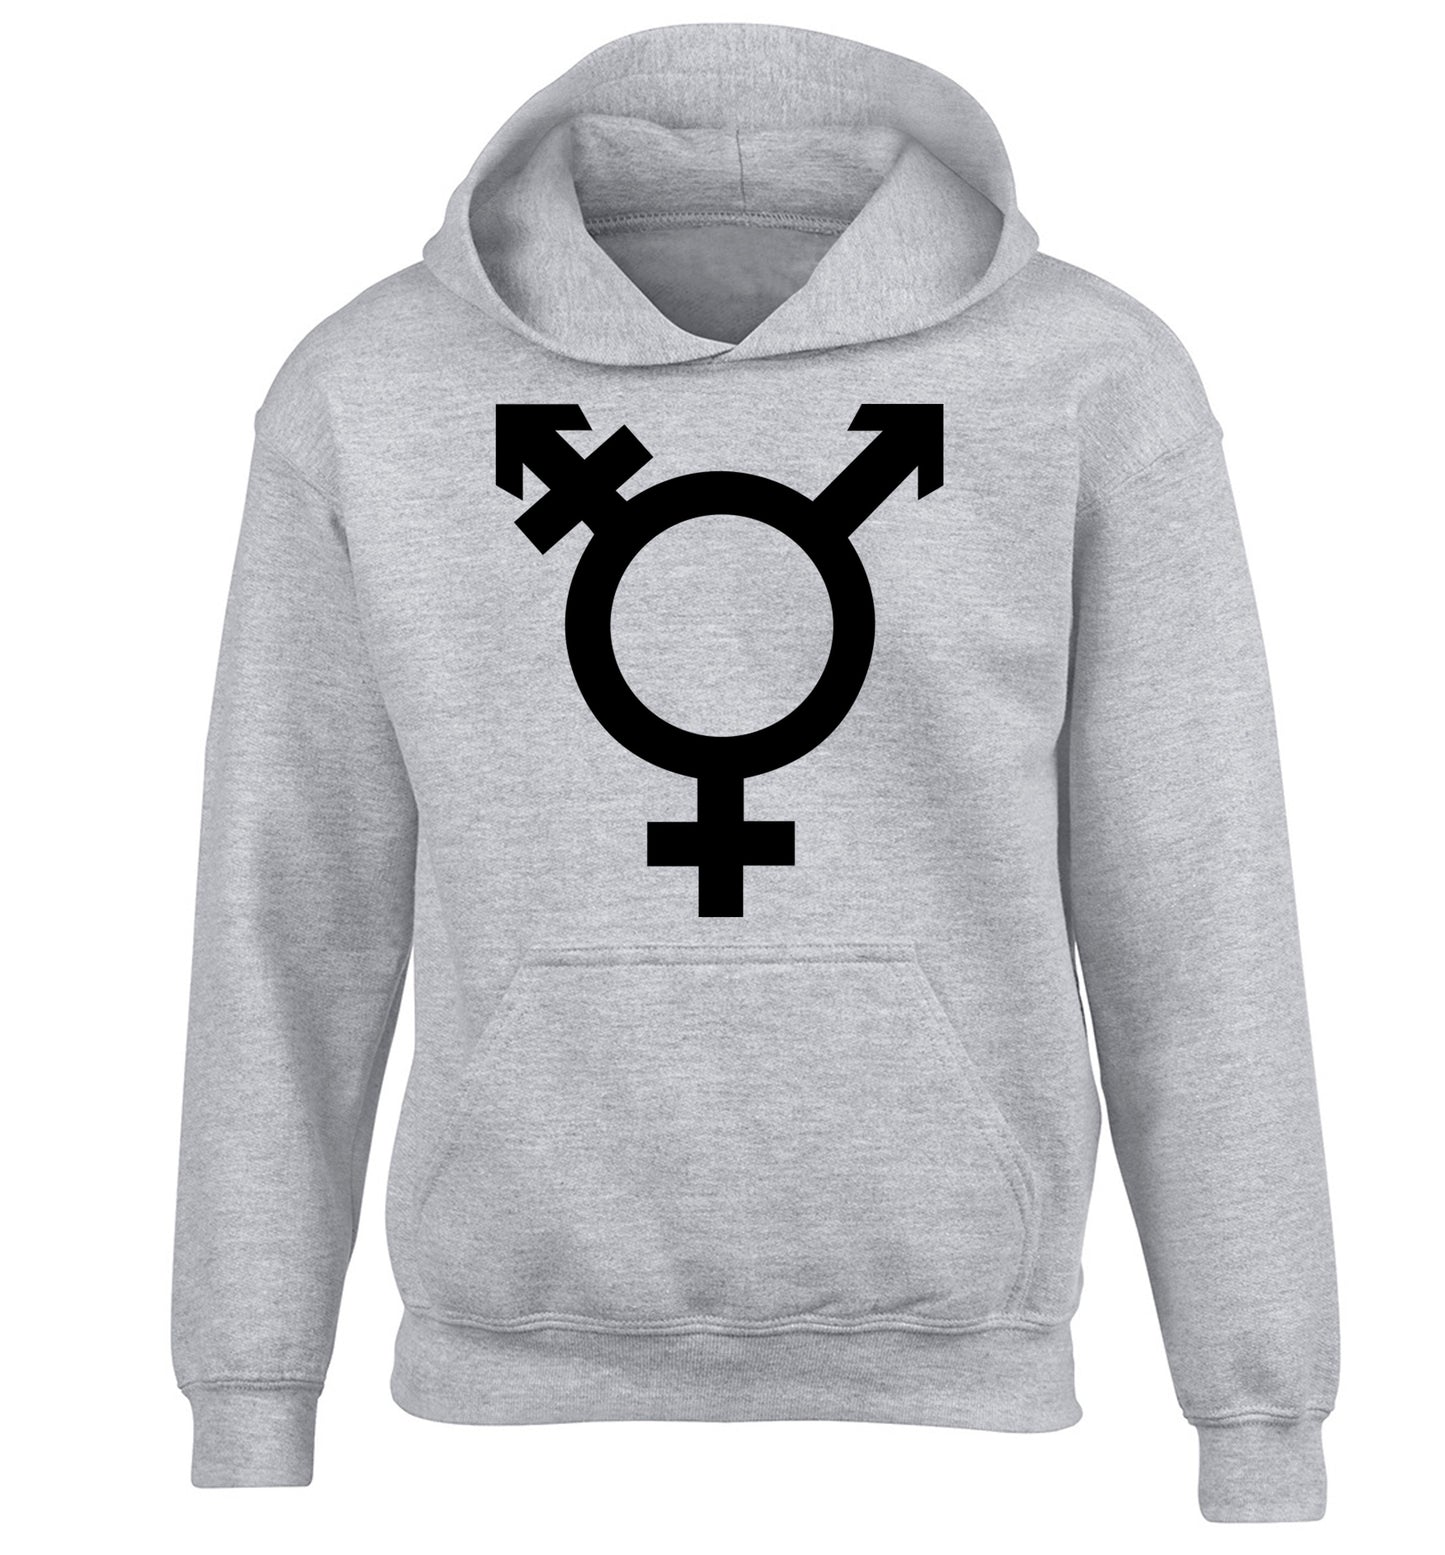 Gender neutral symbol large children's grey hoodie 12-14 Years